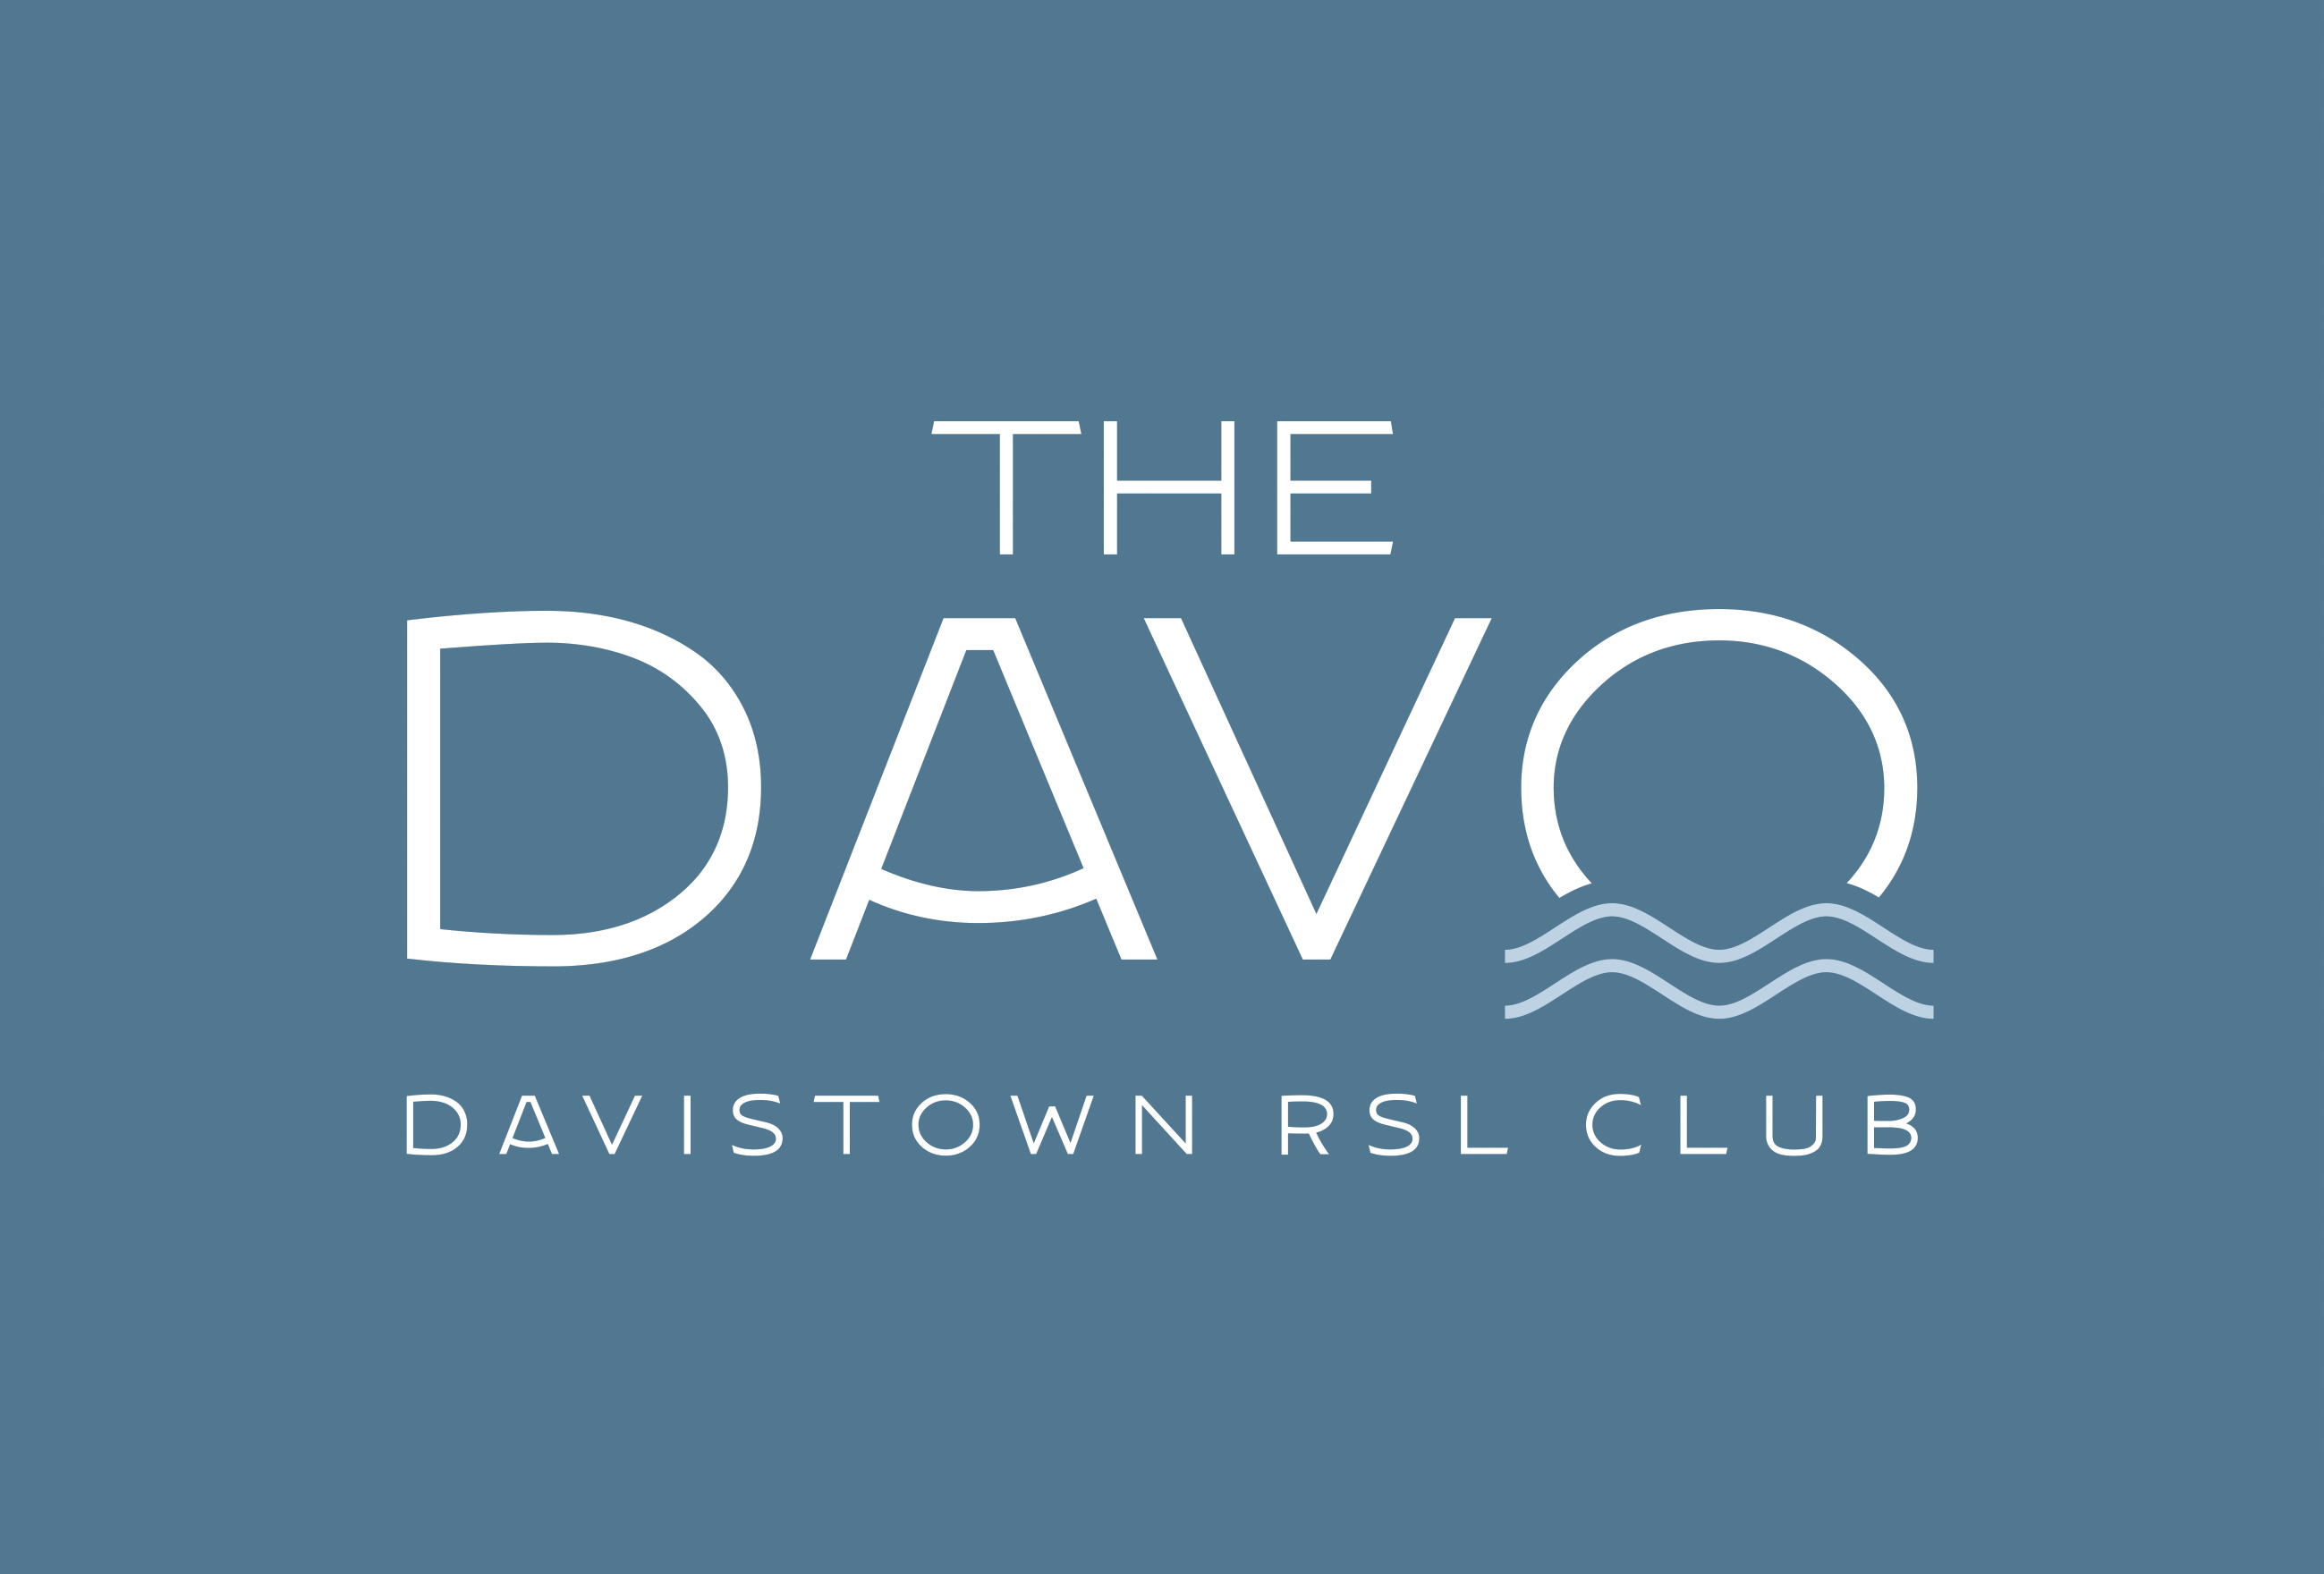 Davistown RSL Club